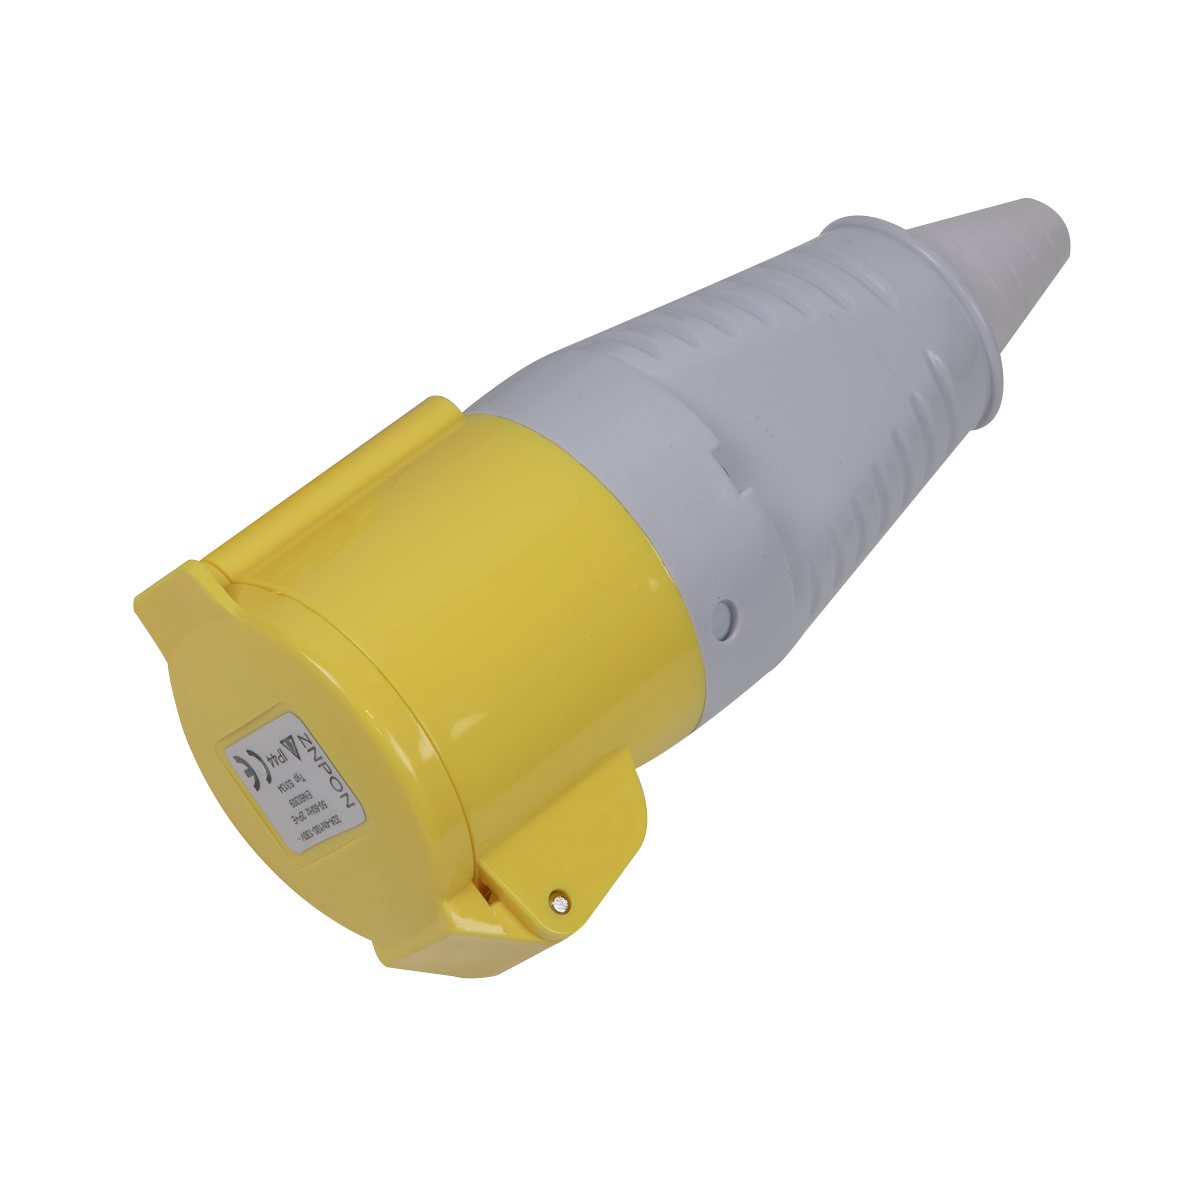 Sealey WC11032 Yellow Socket 110V 32A